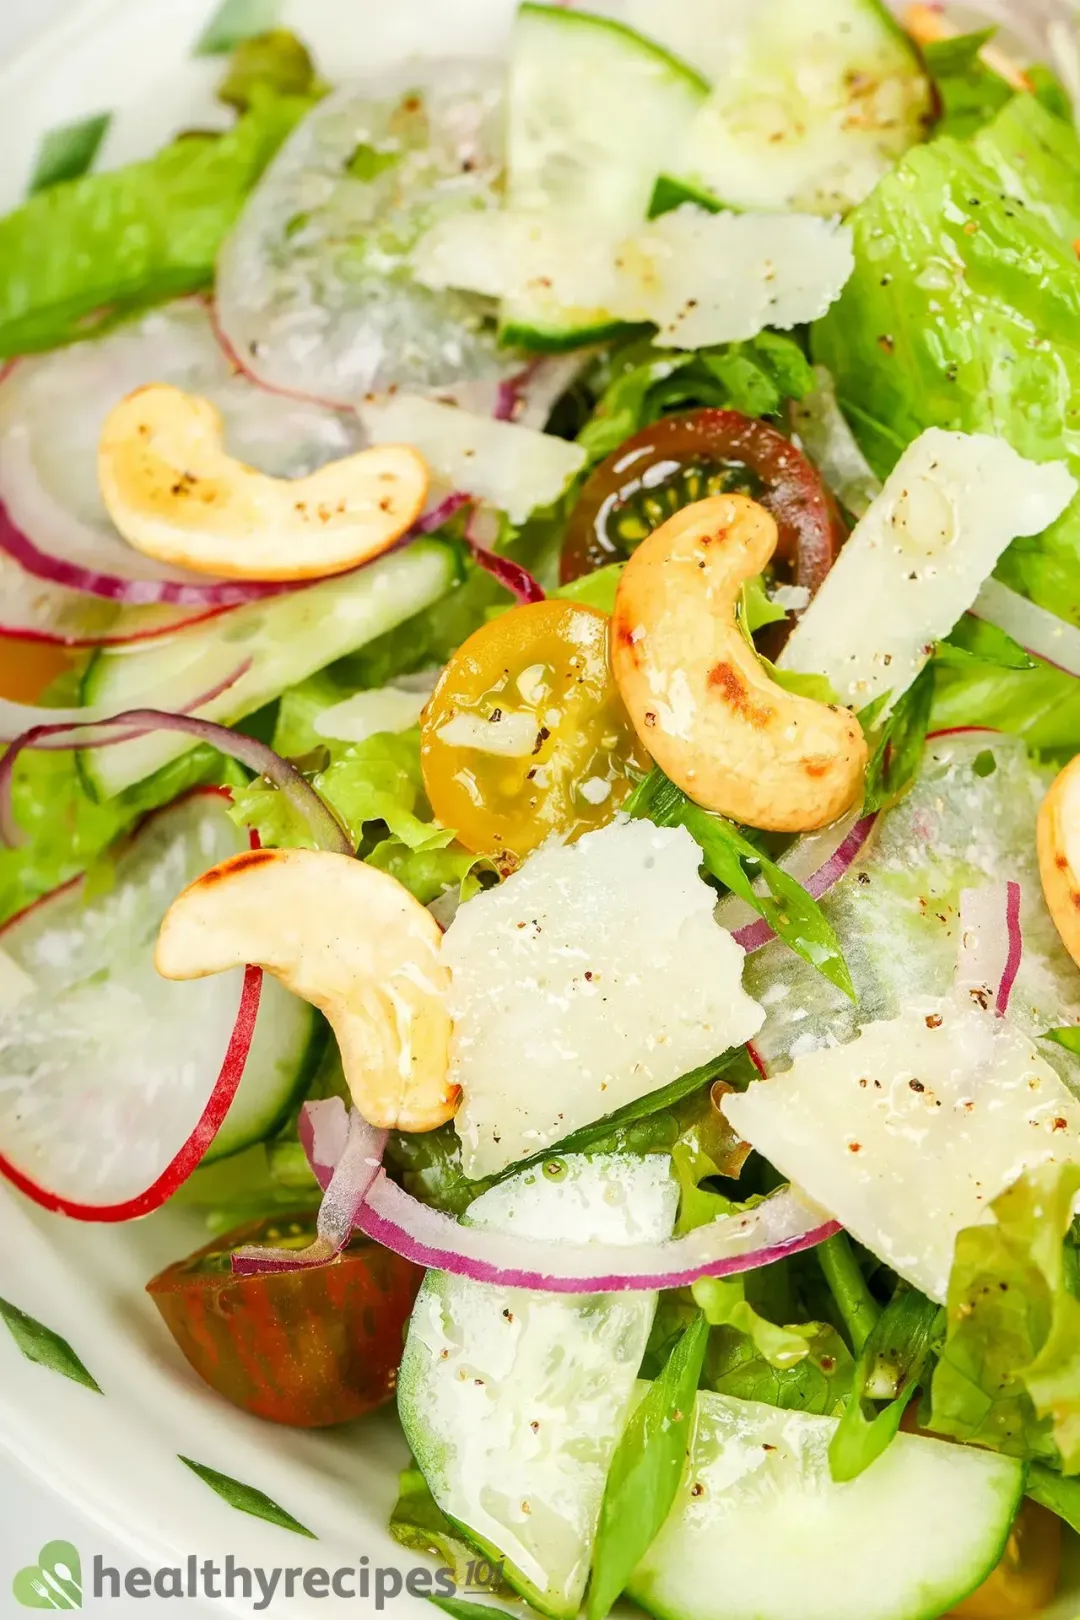 Is Lettuce Salad Healthy